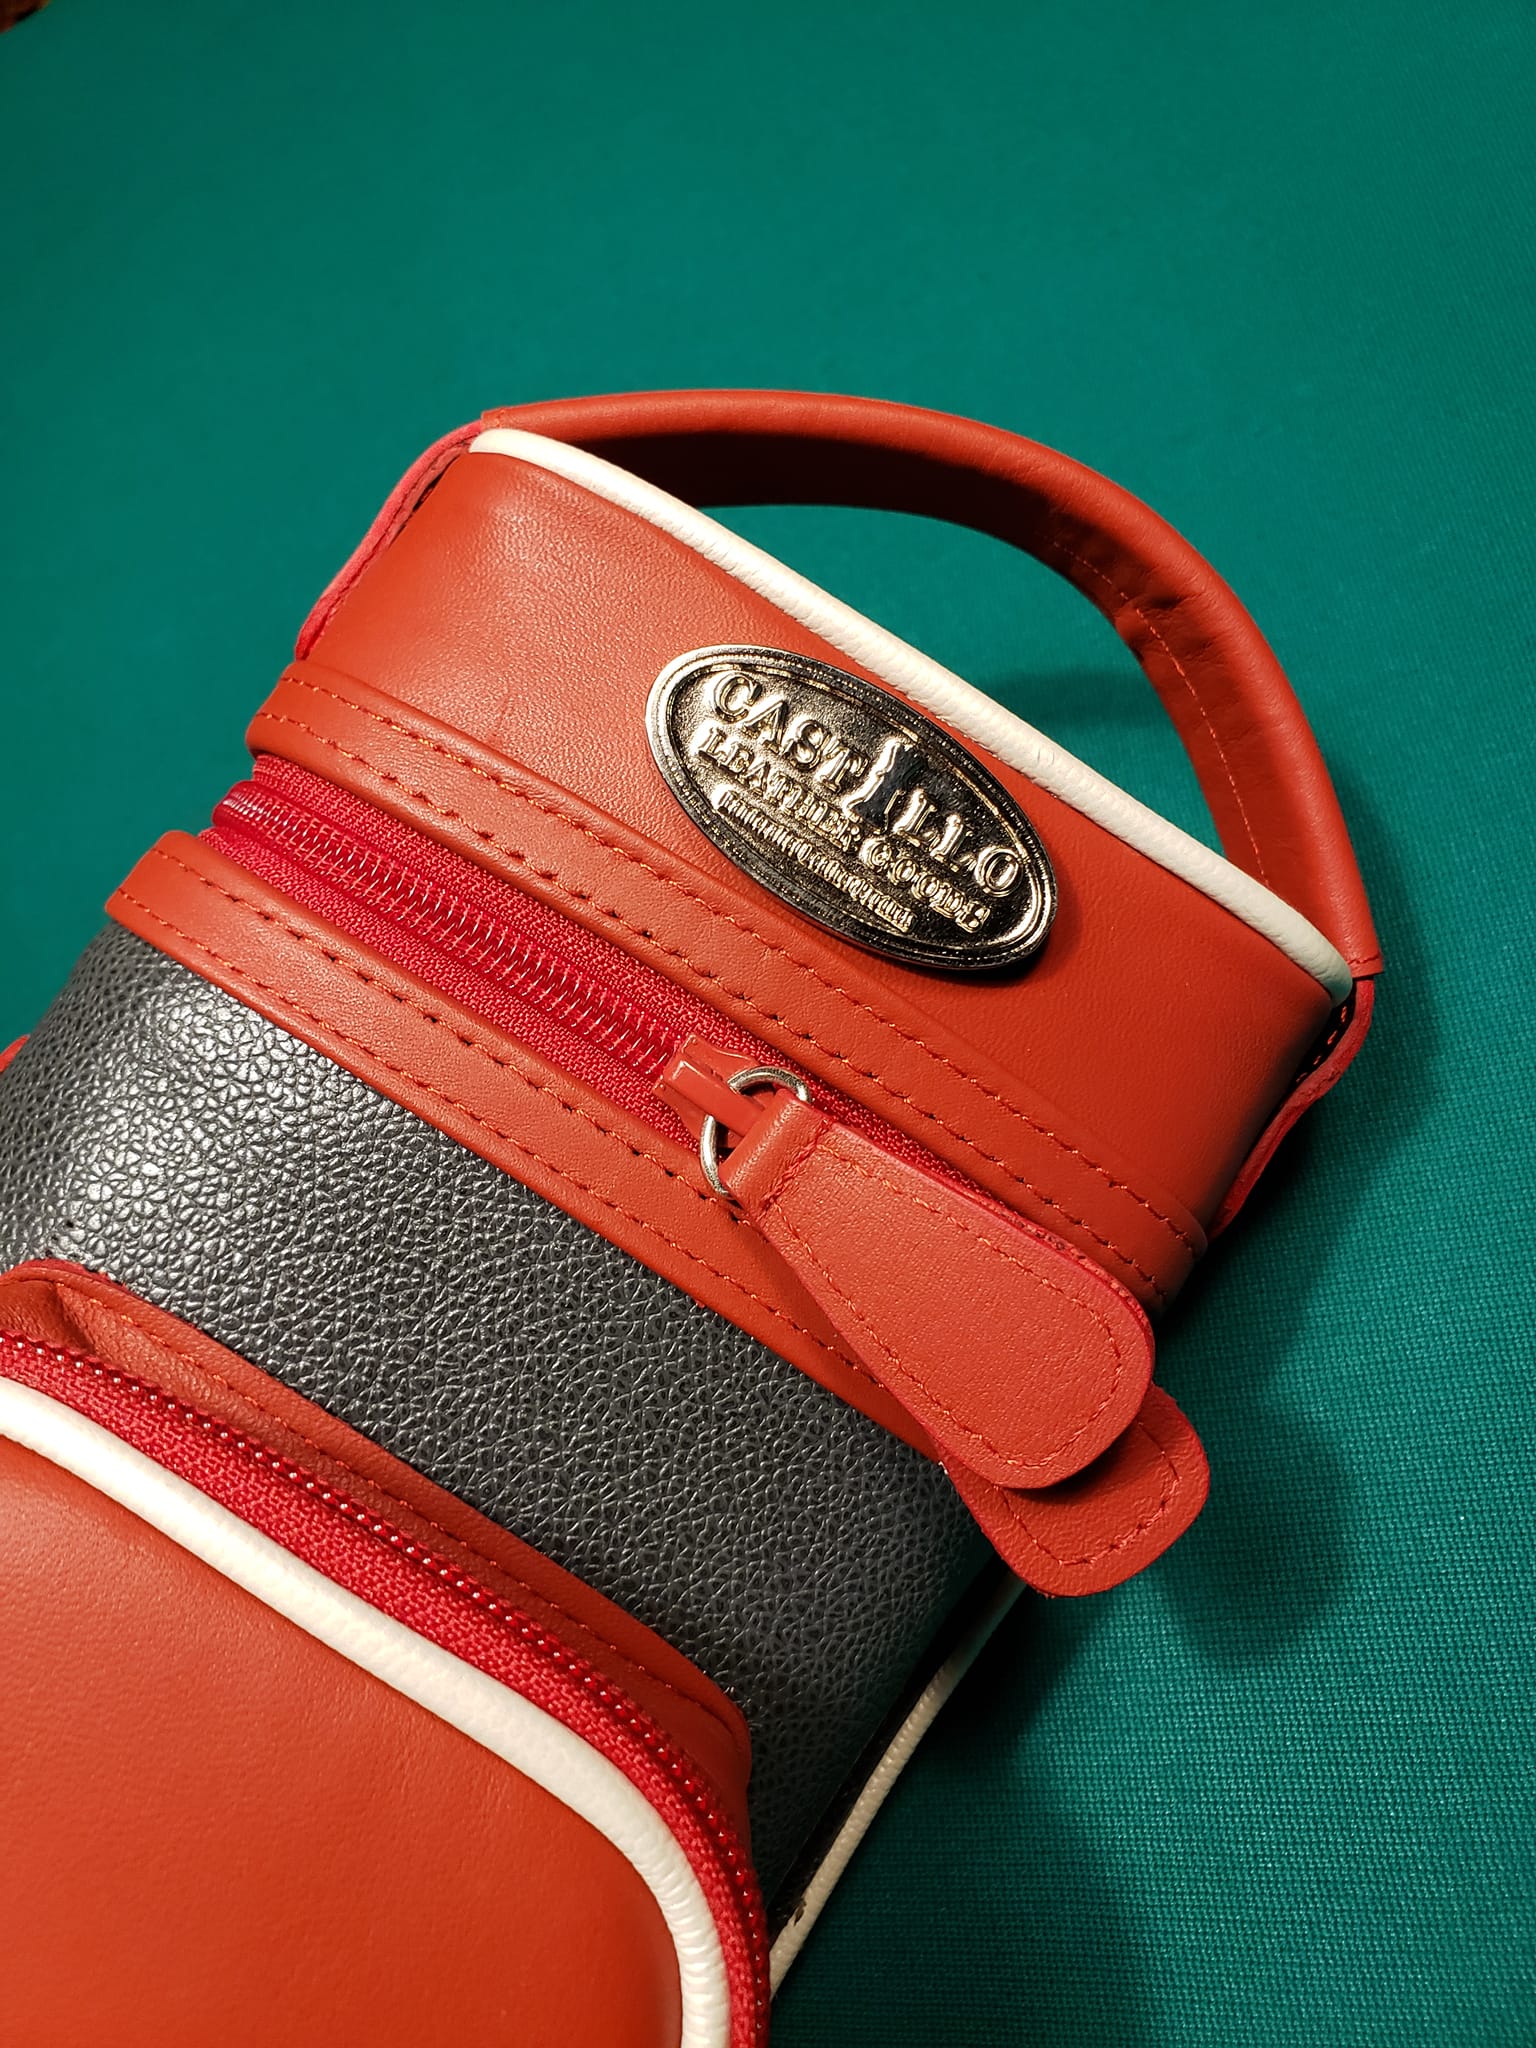 custom-leather-cue-case